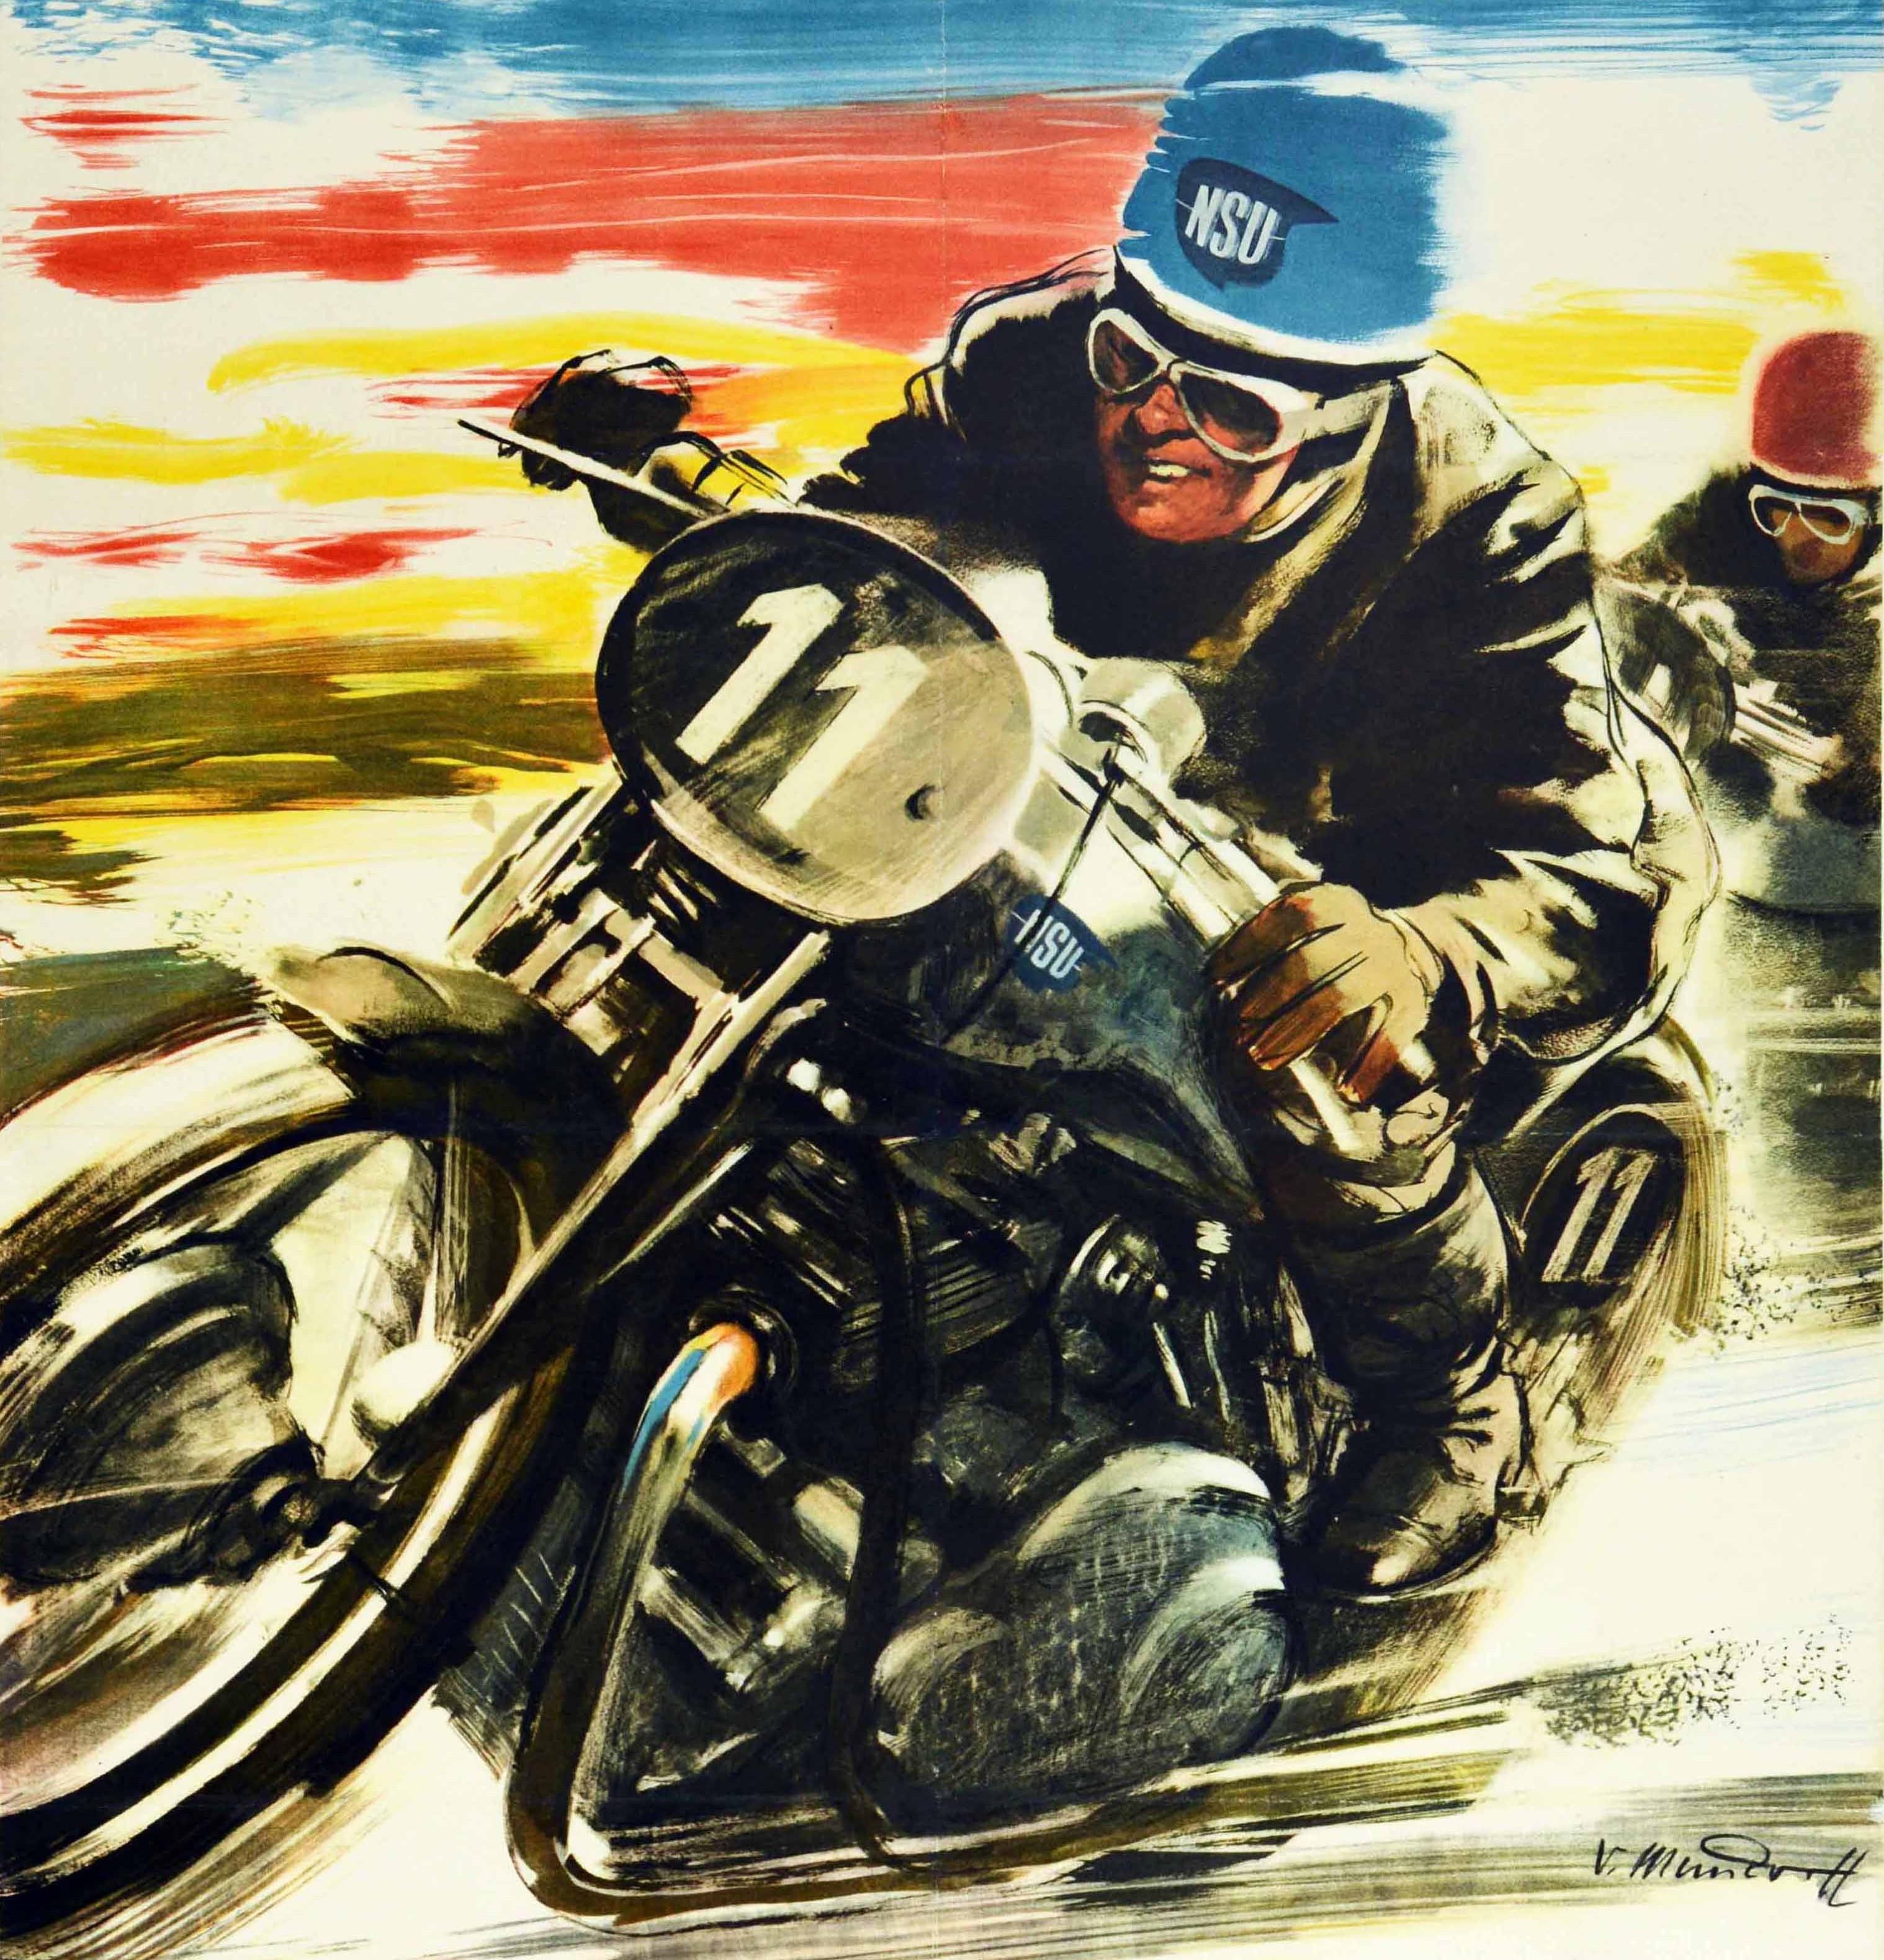 1950s motorcycle racing